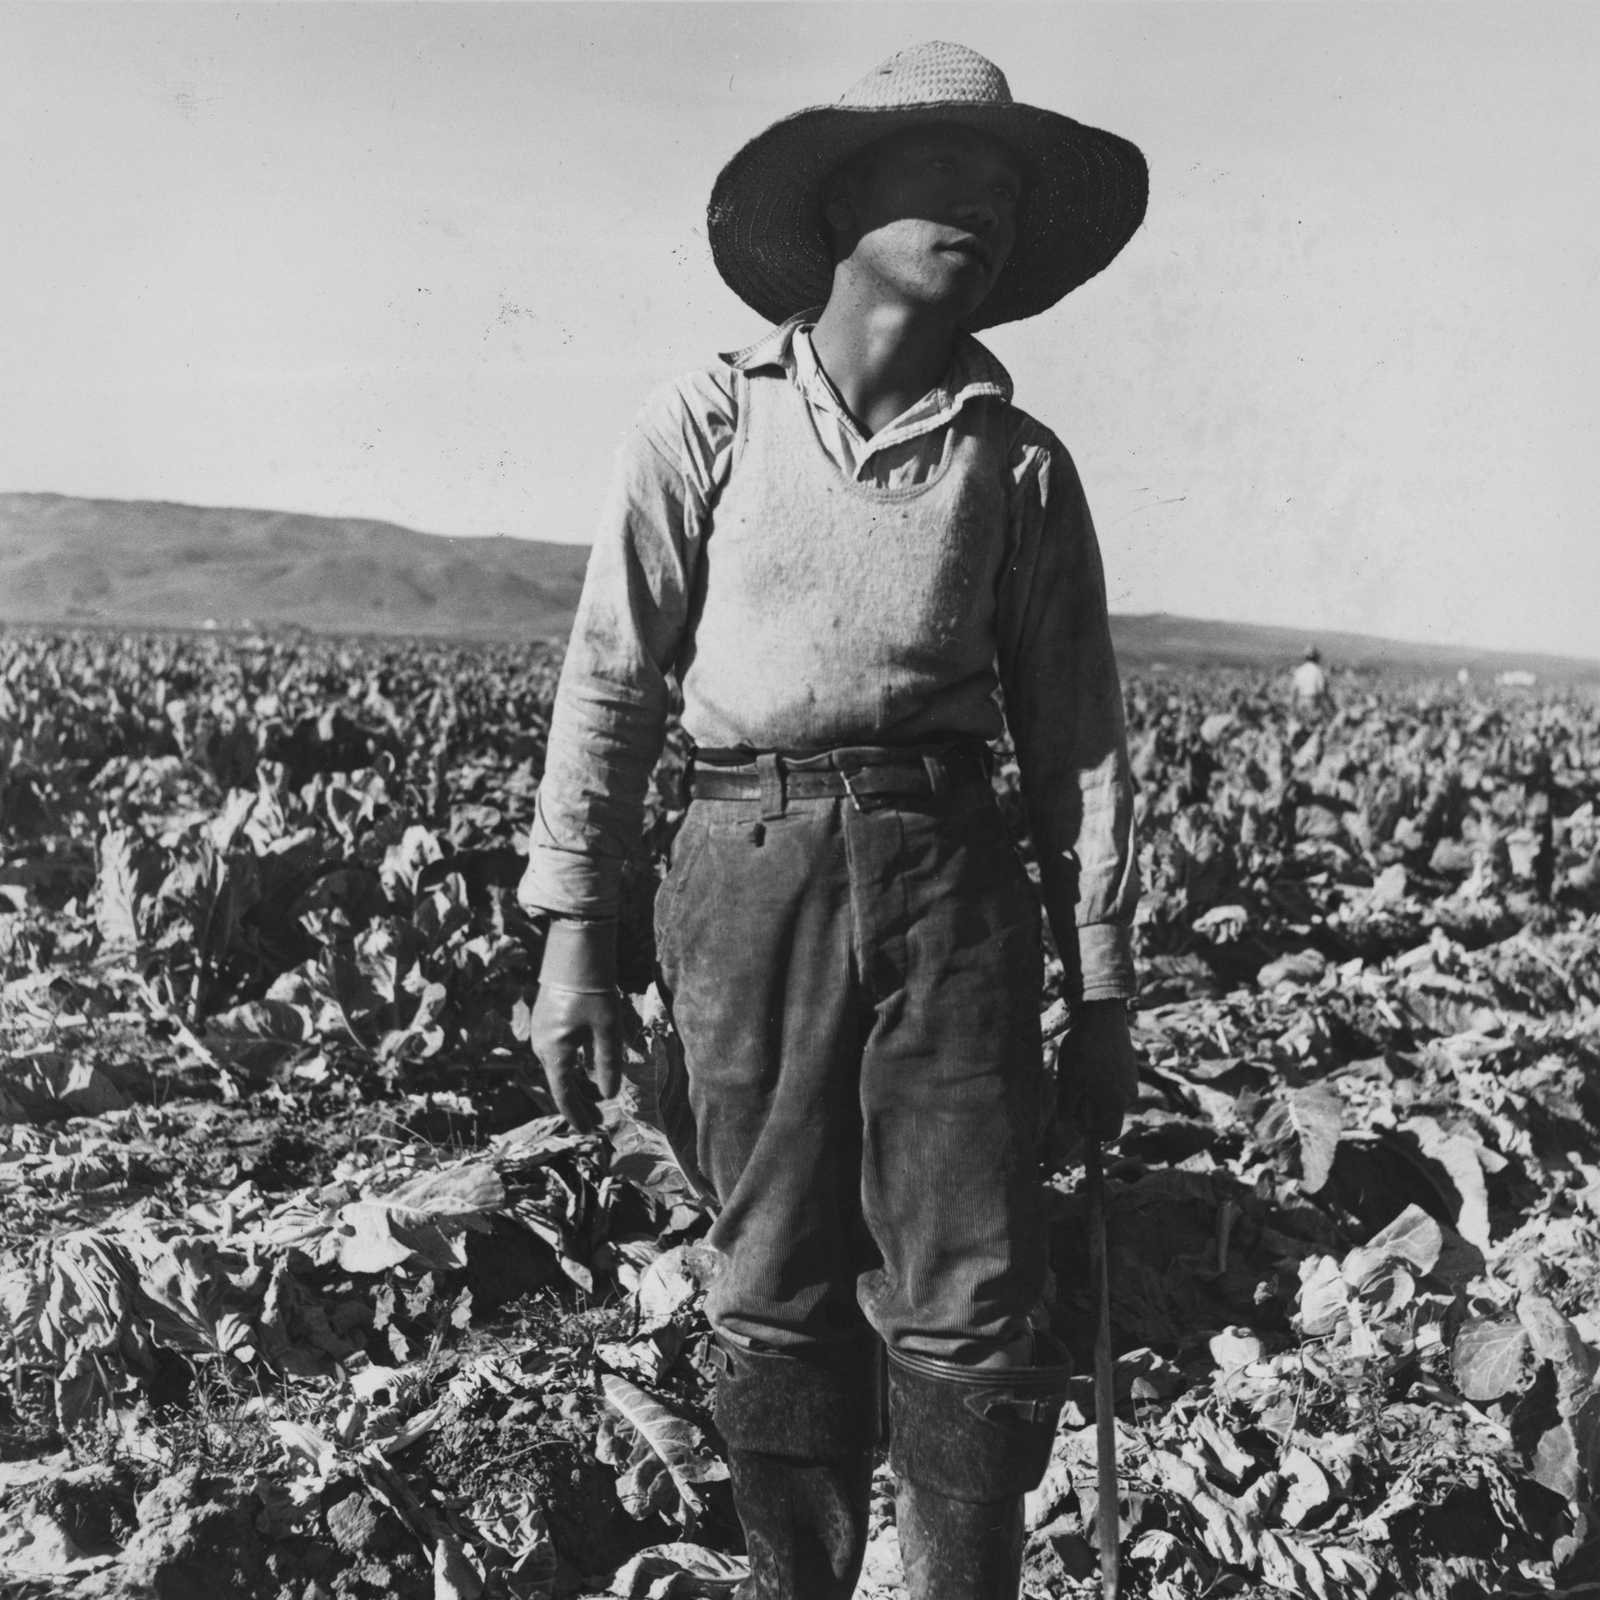 A Filipino boy standing in a field of cauliflower in Santa Maria, California.